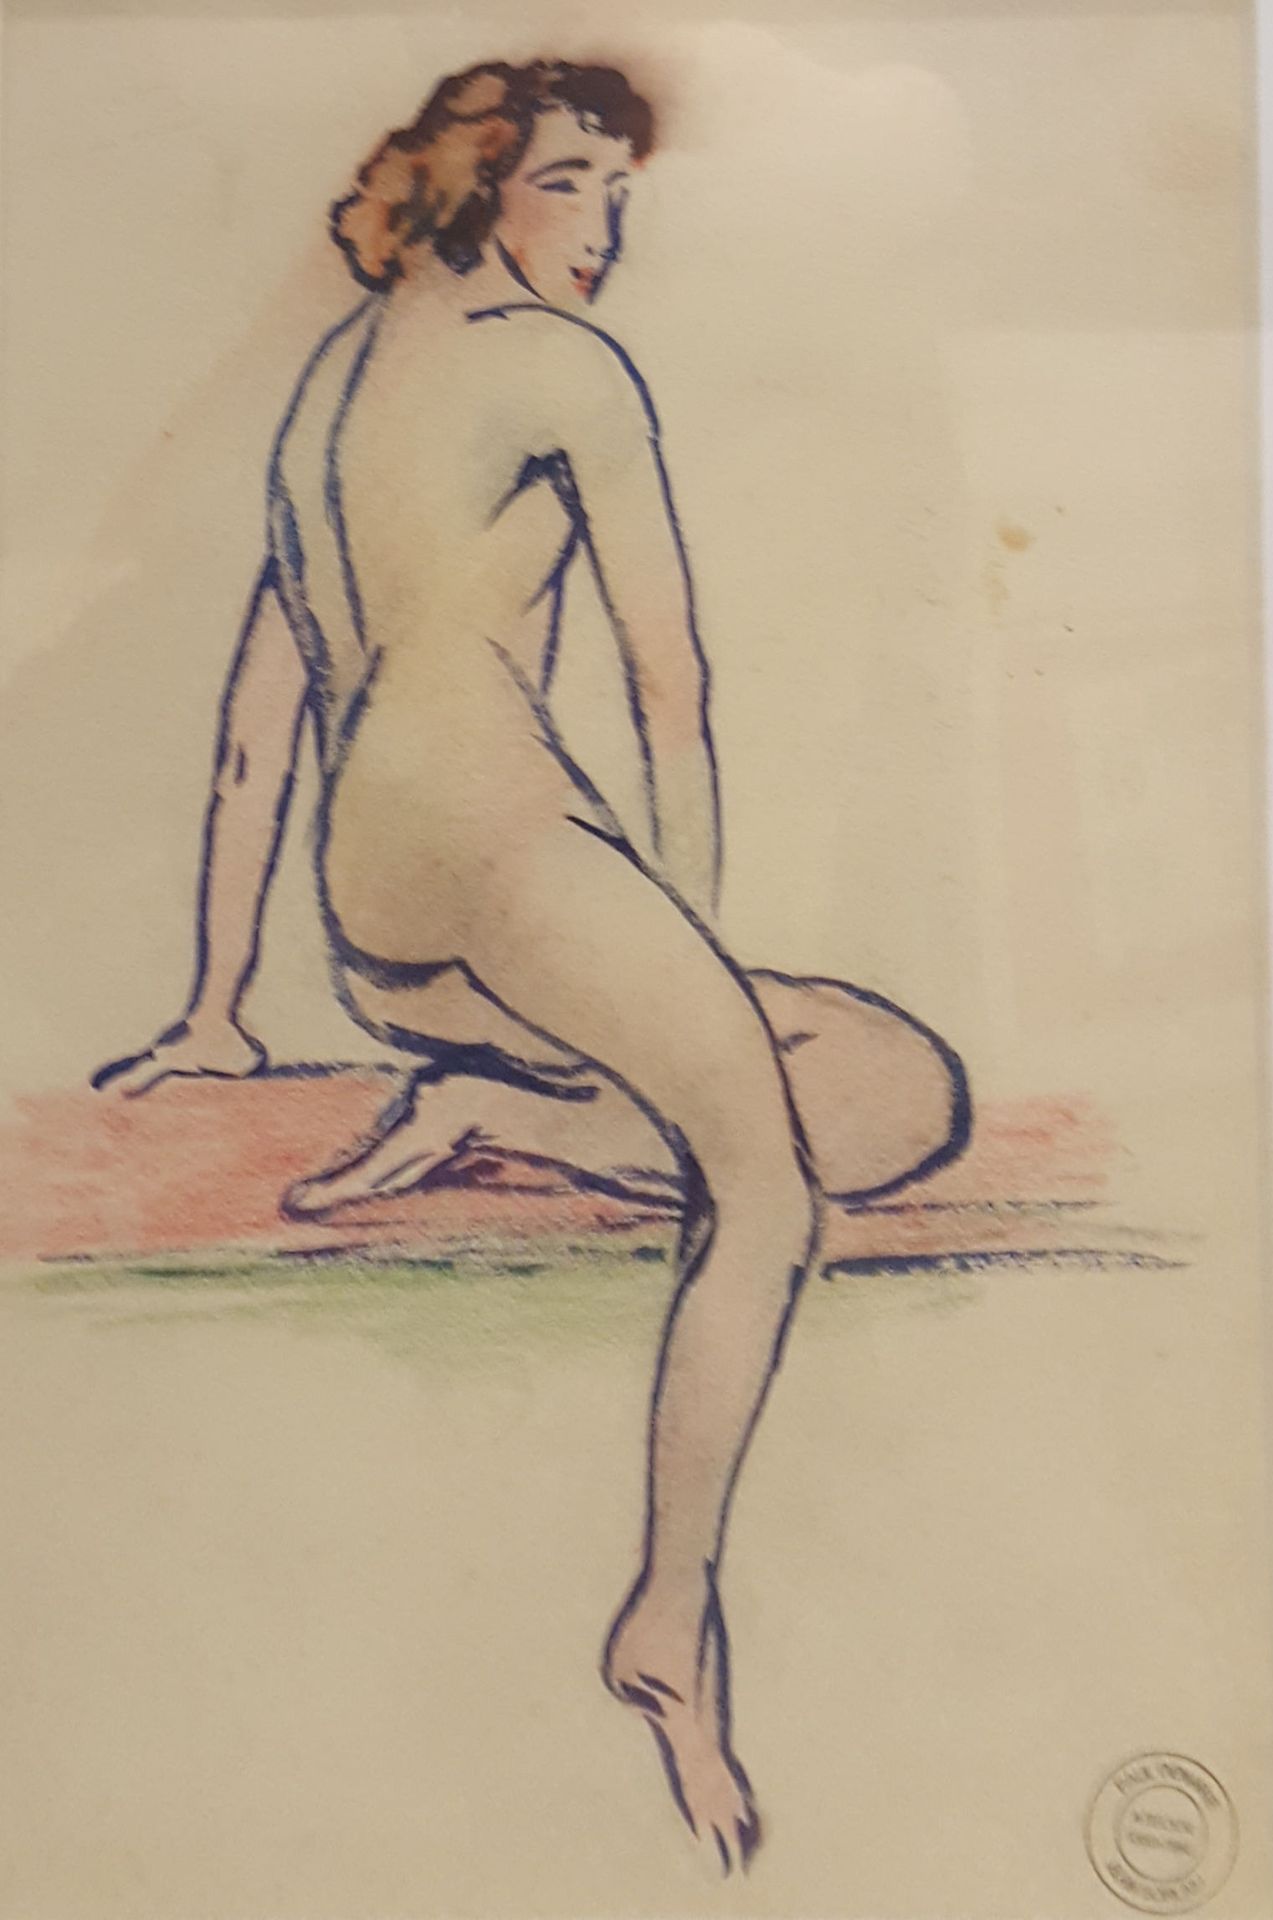 Null 索朗-让(SORLAIN)(1859-1942)

女性裸体

纸上铅笔，右下方有工作室印章

污渍

29 x 20 厘米